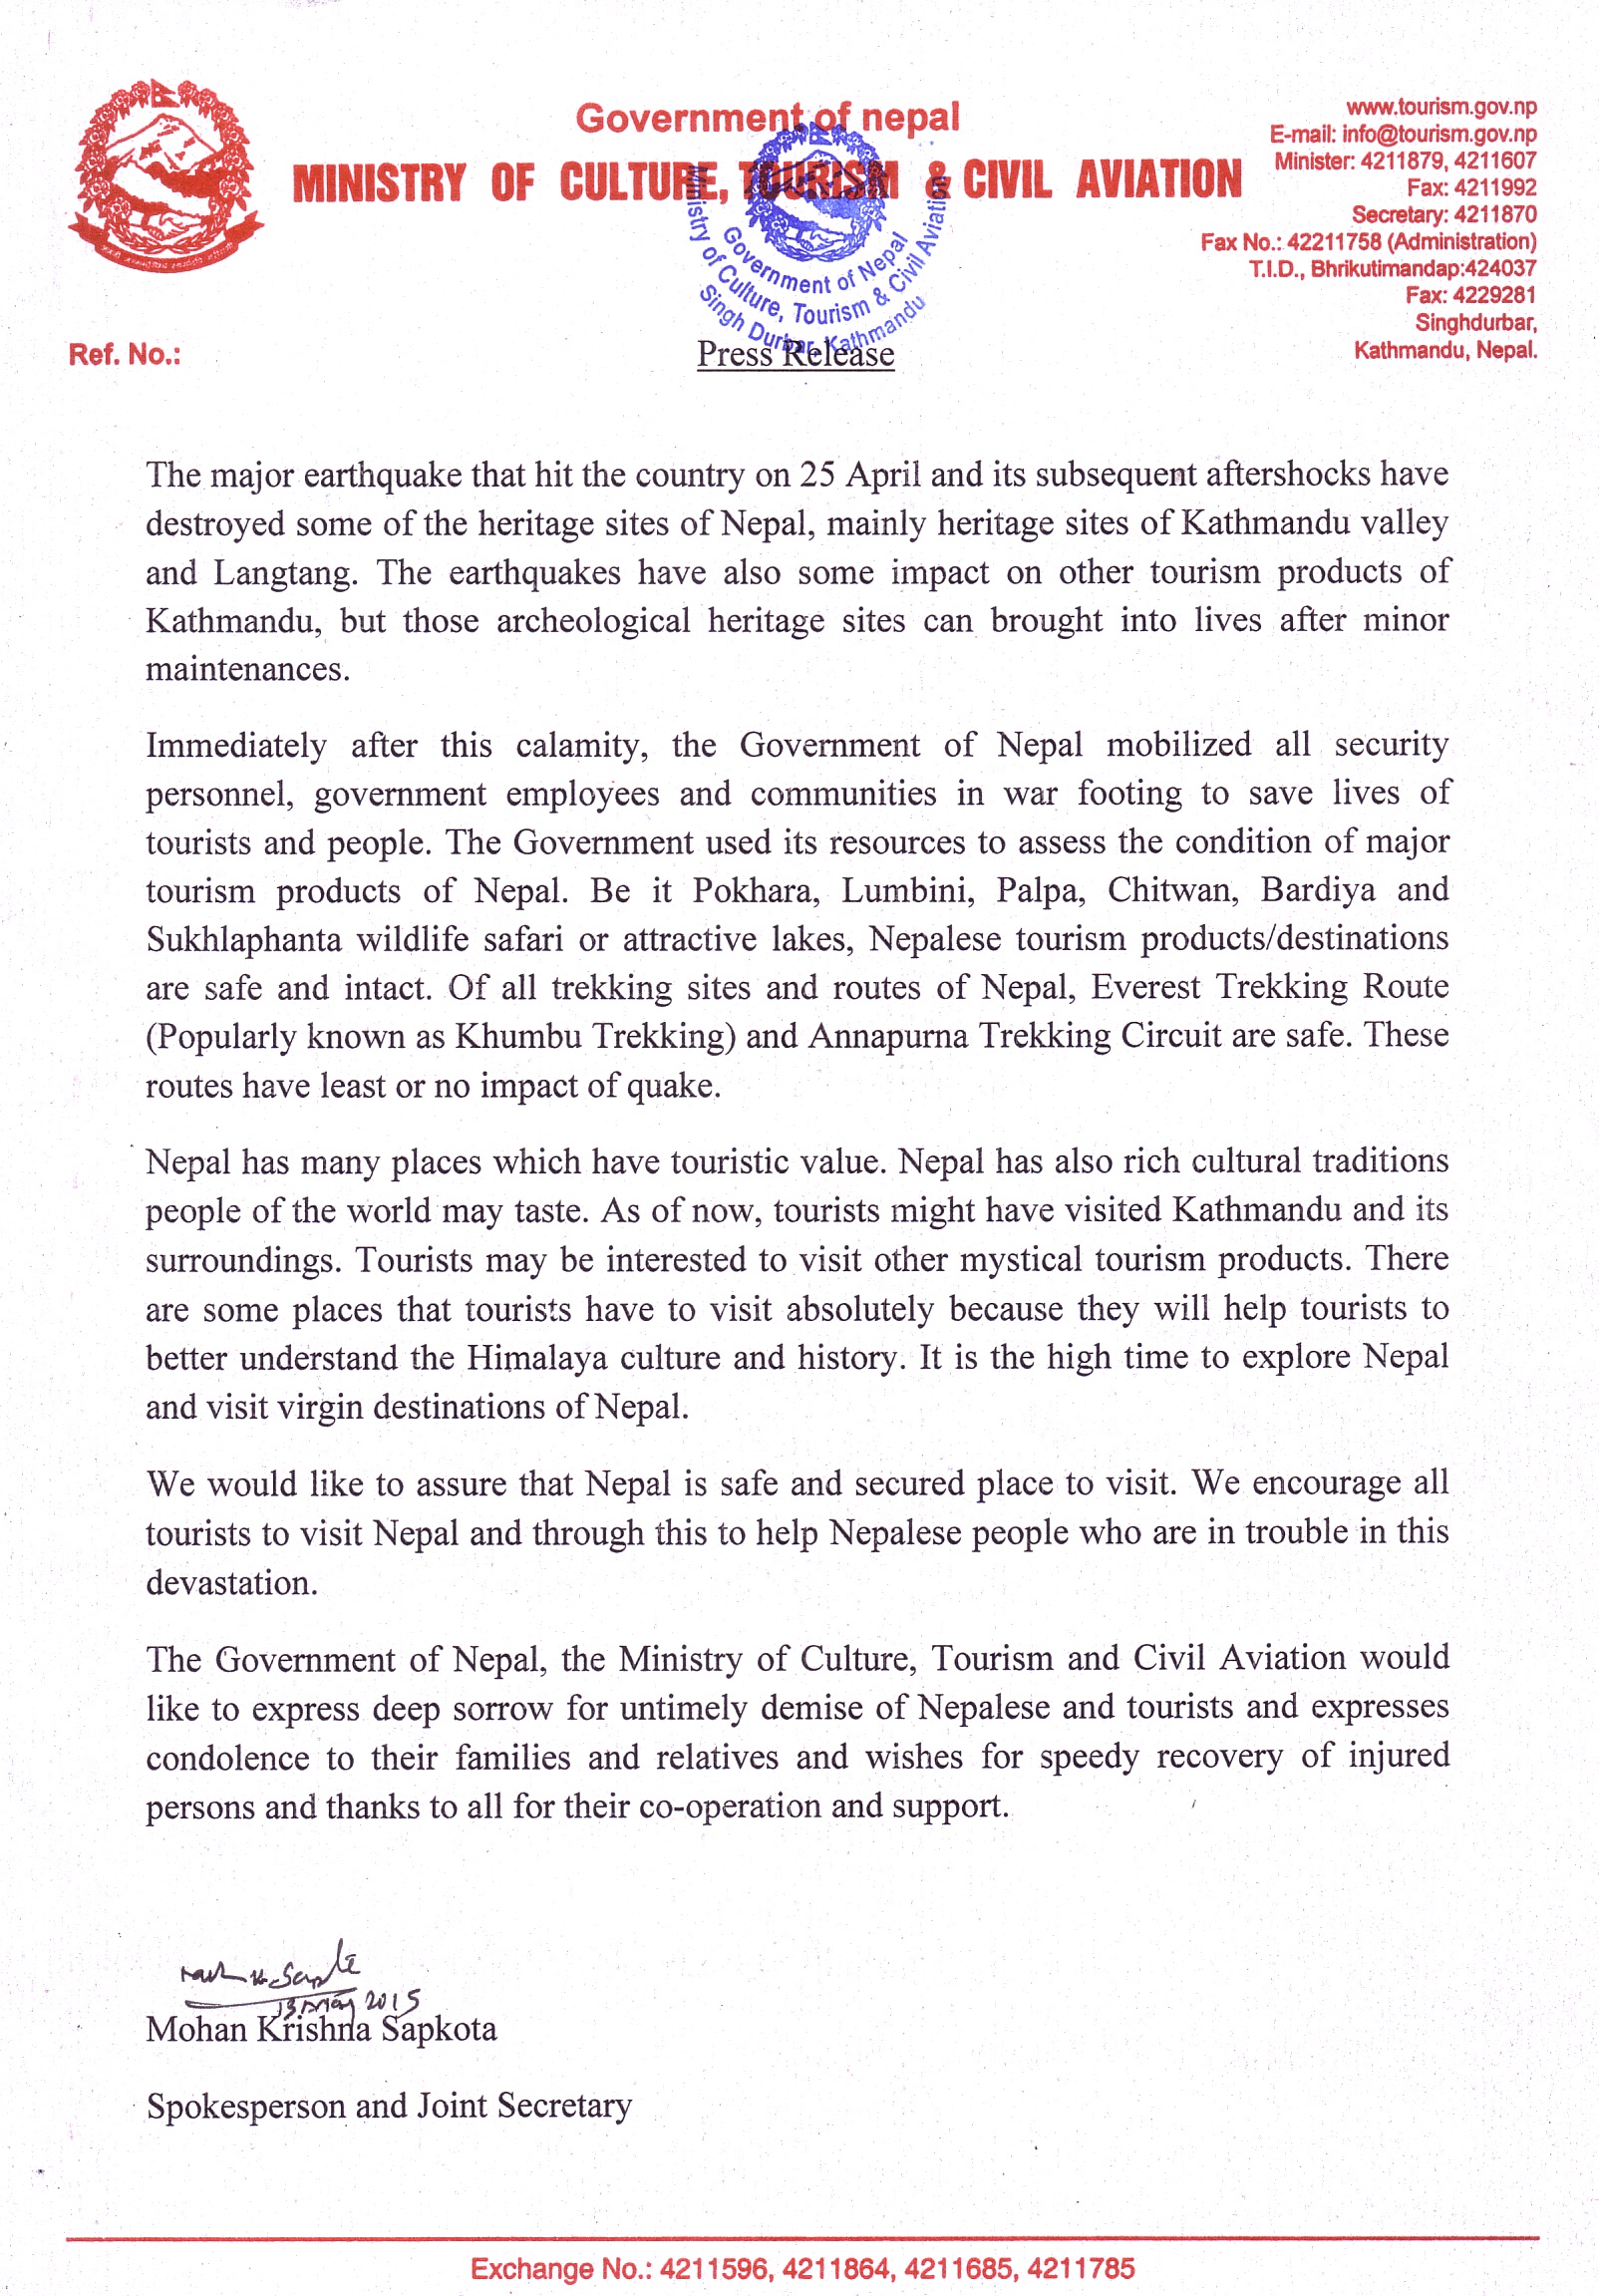 Press Release - Nepal Government_Mai 2015